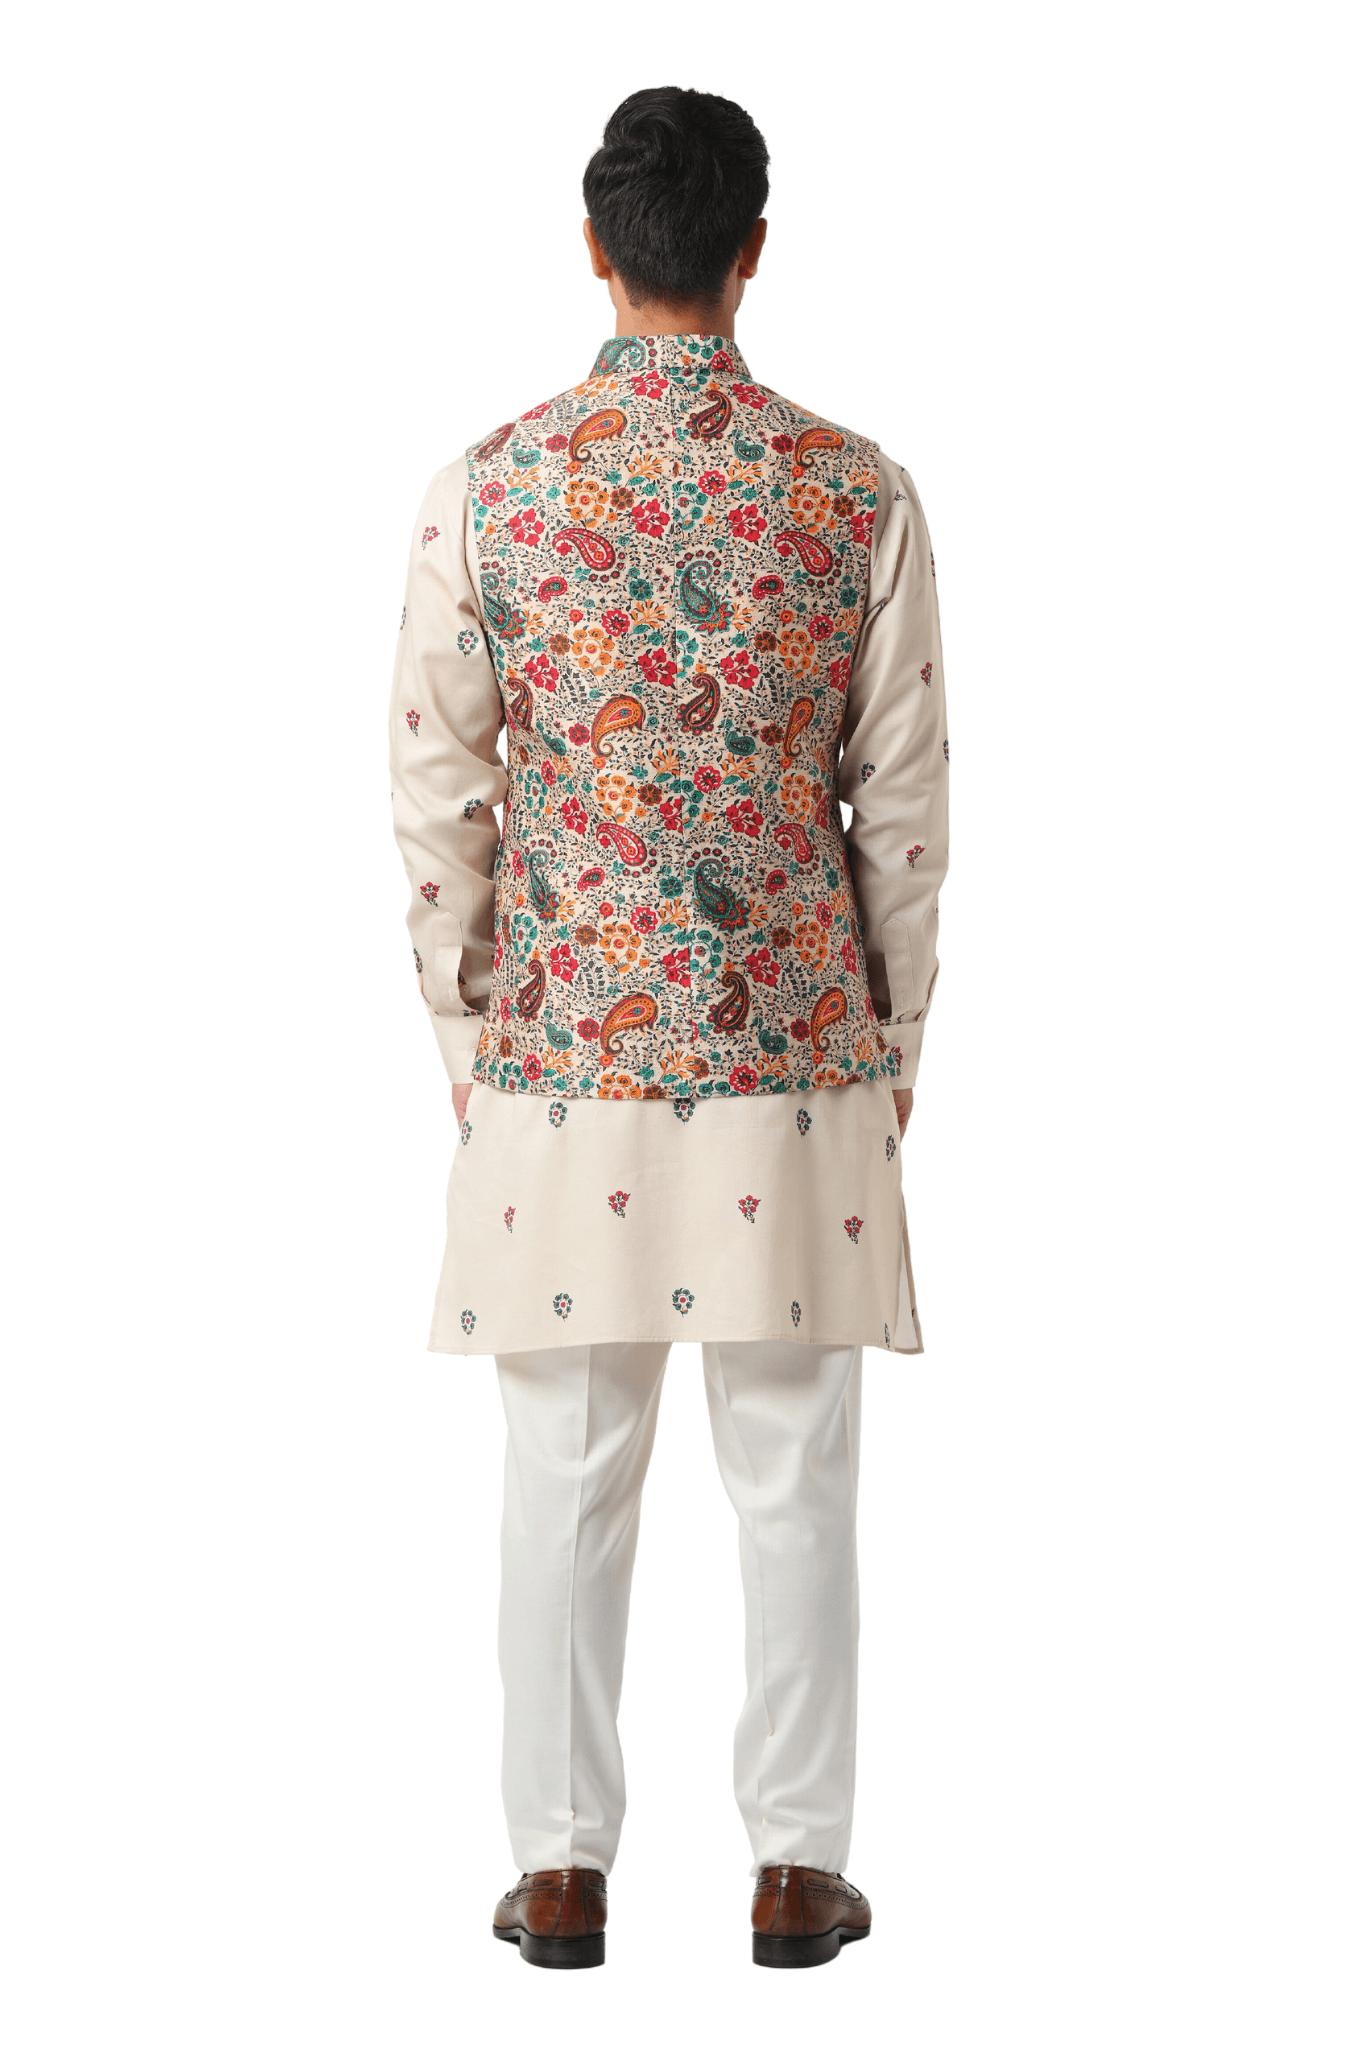 Gujarati men outfit | Garba dress, Fashion, Outfits